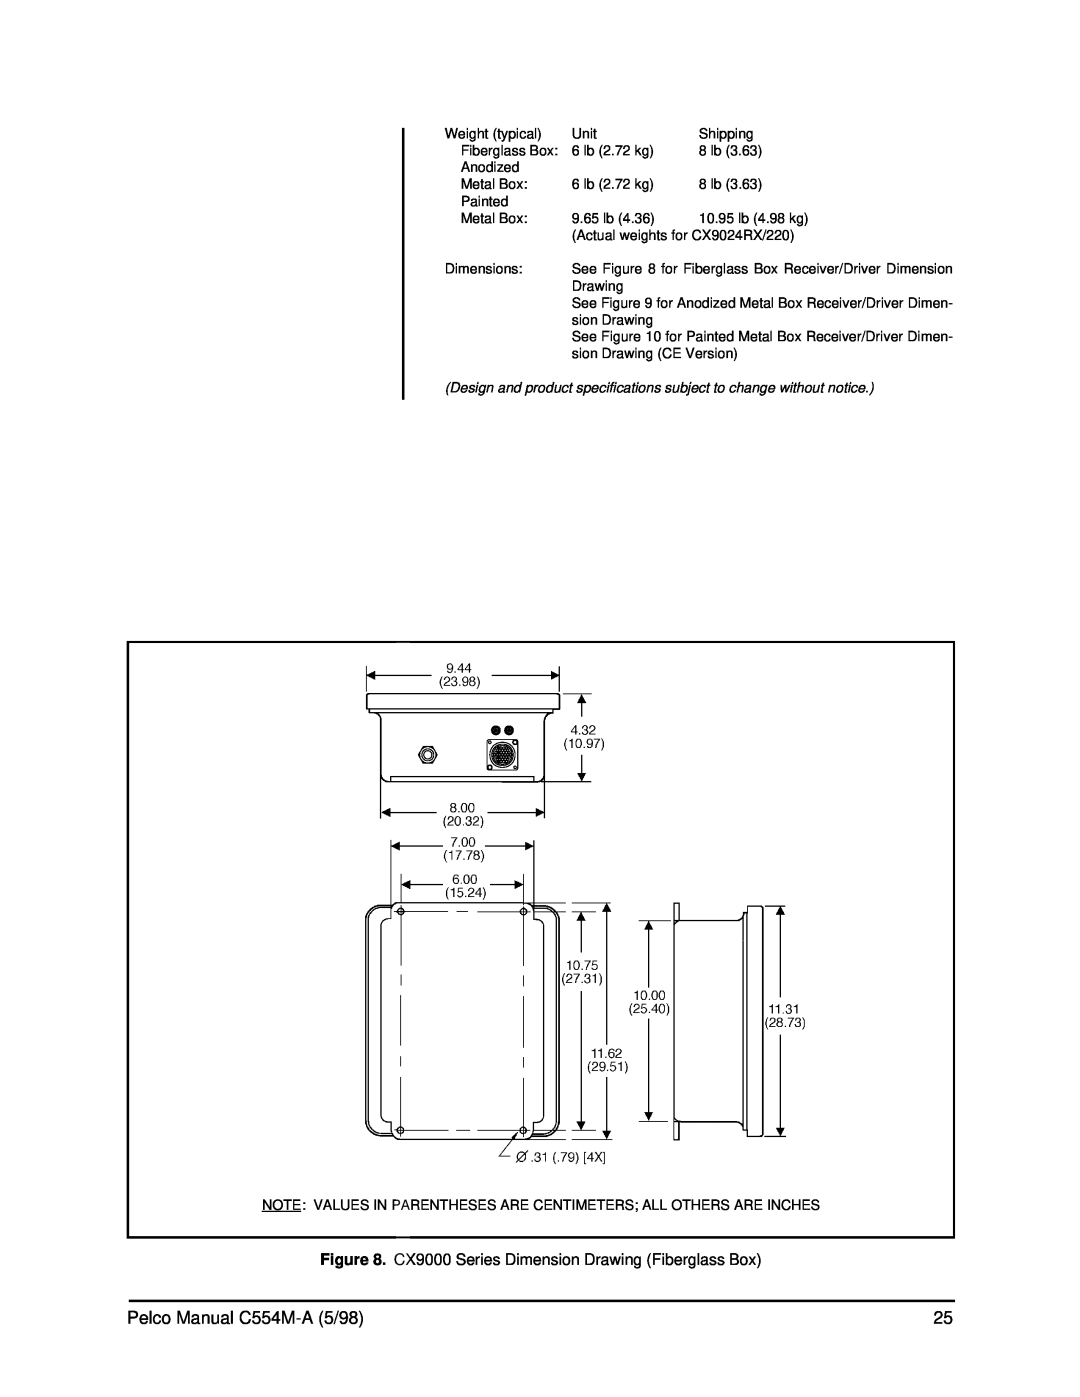 Pelco C554M-A (5/98) operation manual Pelco Manual C554M-A 5/98, CX9000 Series Dimension Drawing Fiberglass Box 